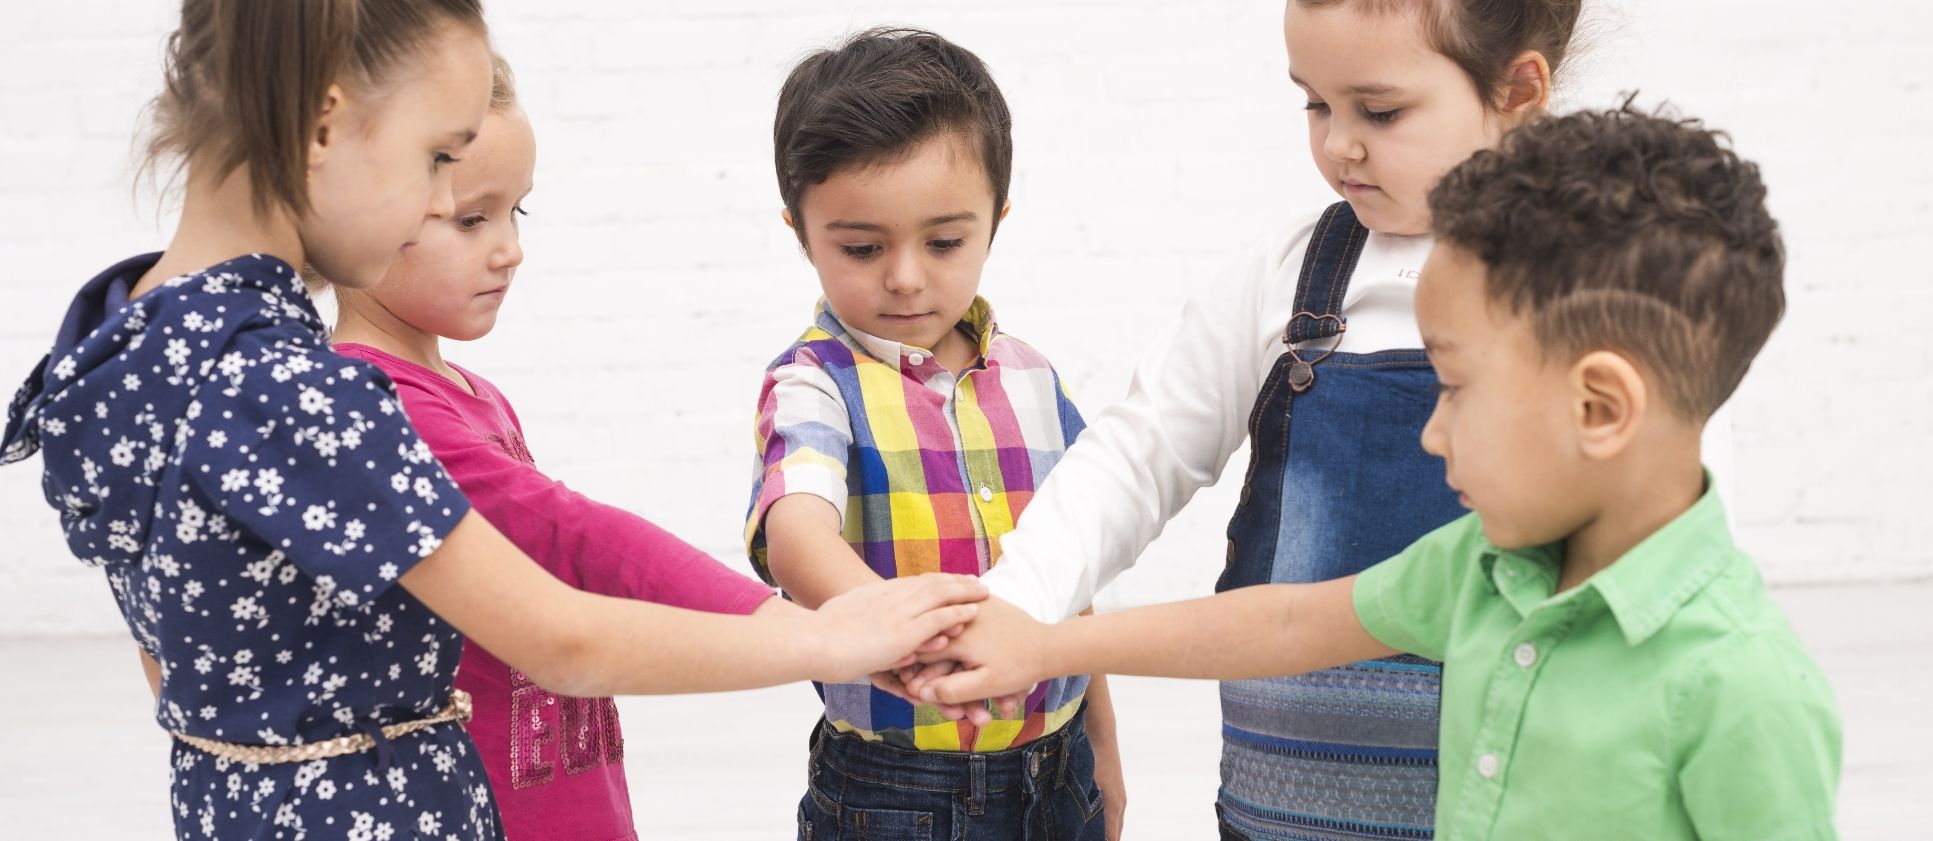 children holding hand group